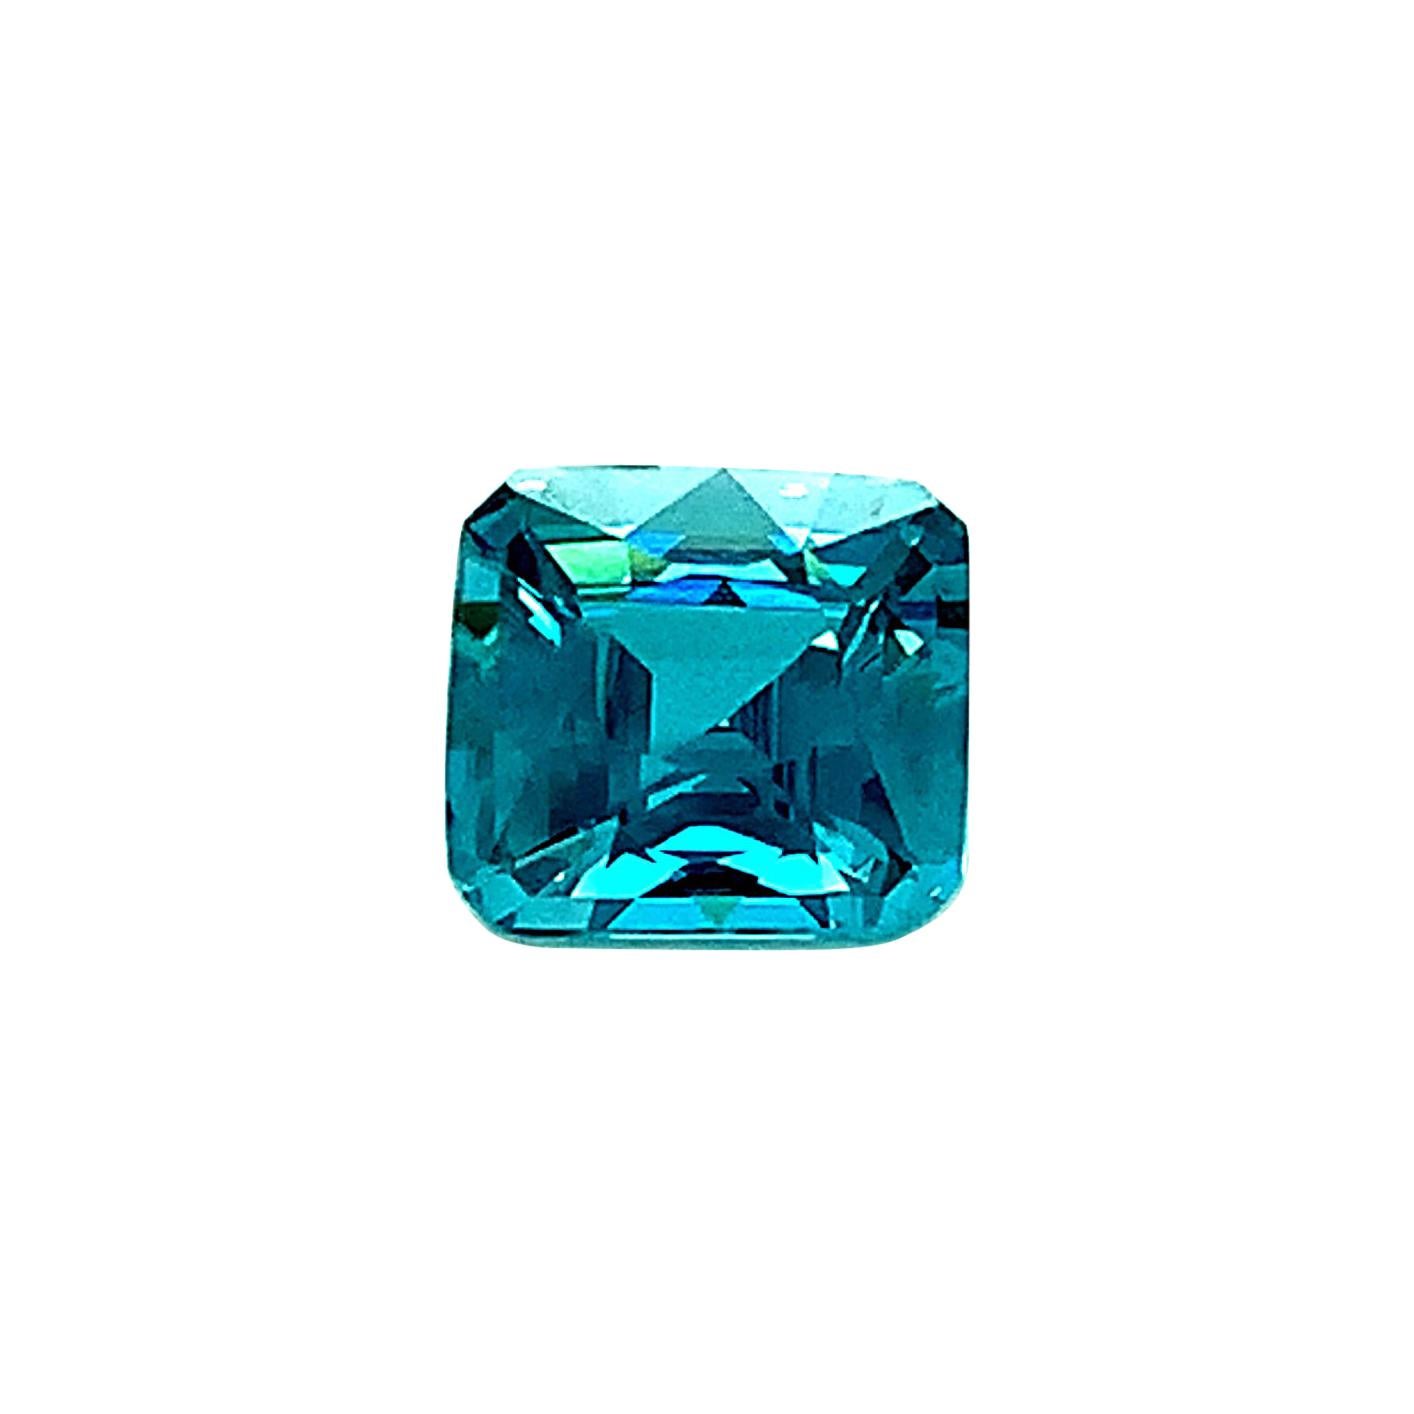 5.47 Carat Blue Zircon Square Octagon, Unset Loose Gemstone 